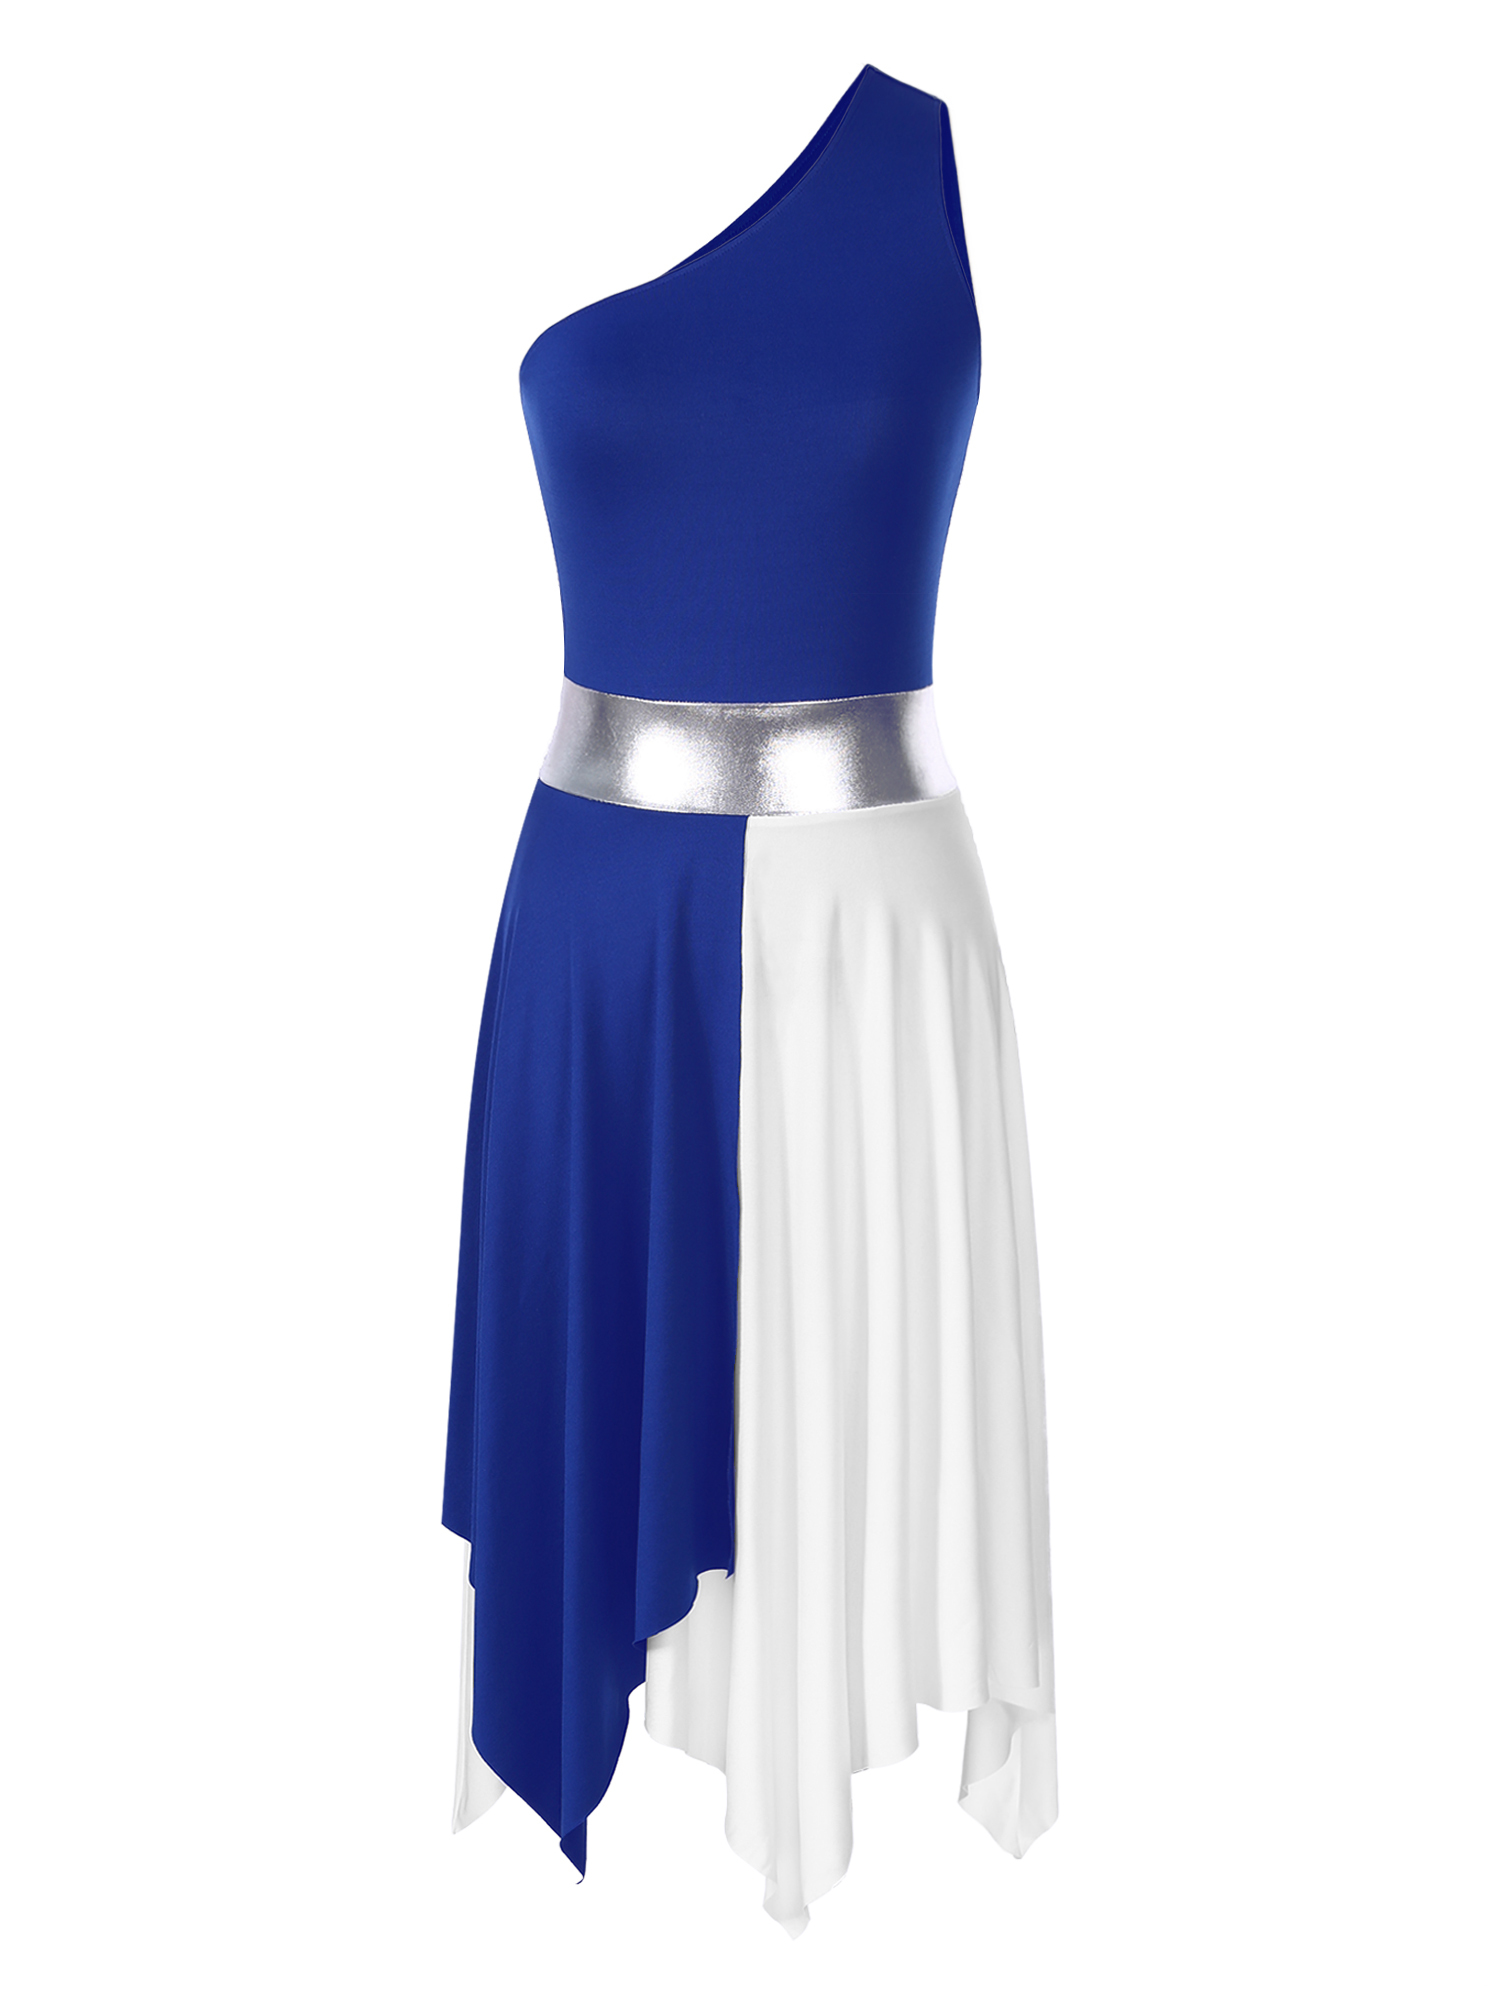 KEJIG Evening Dresses Royal Blue Dress for Women Women Elegant Dress ...